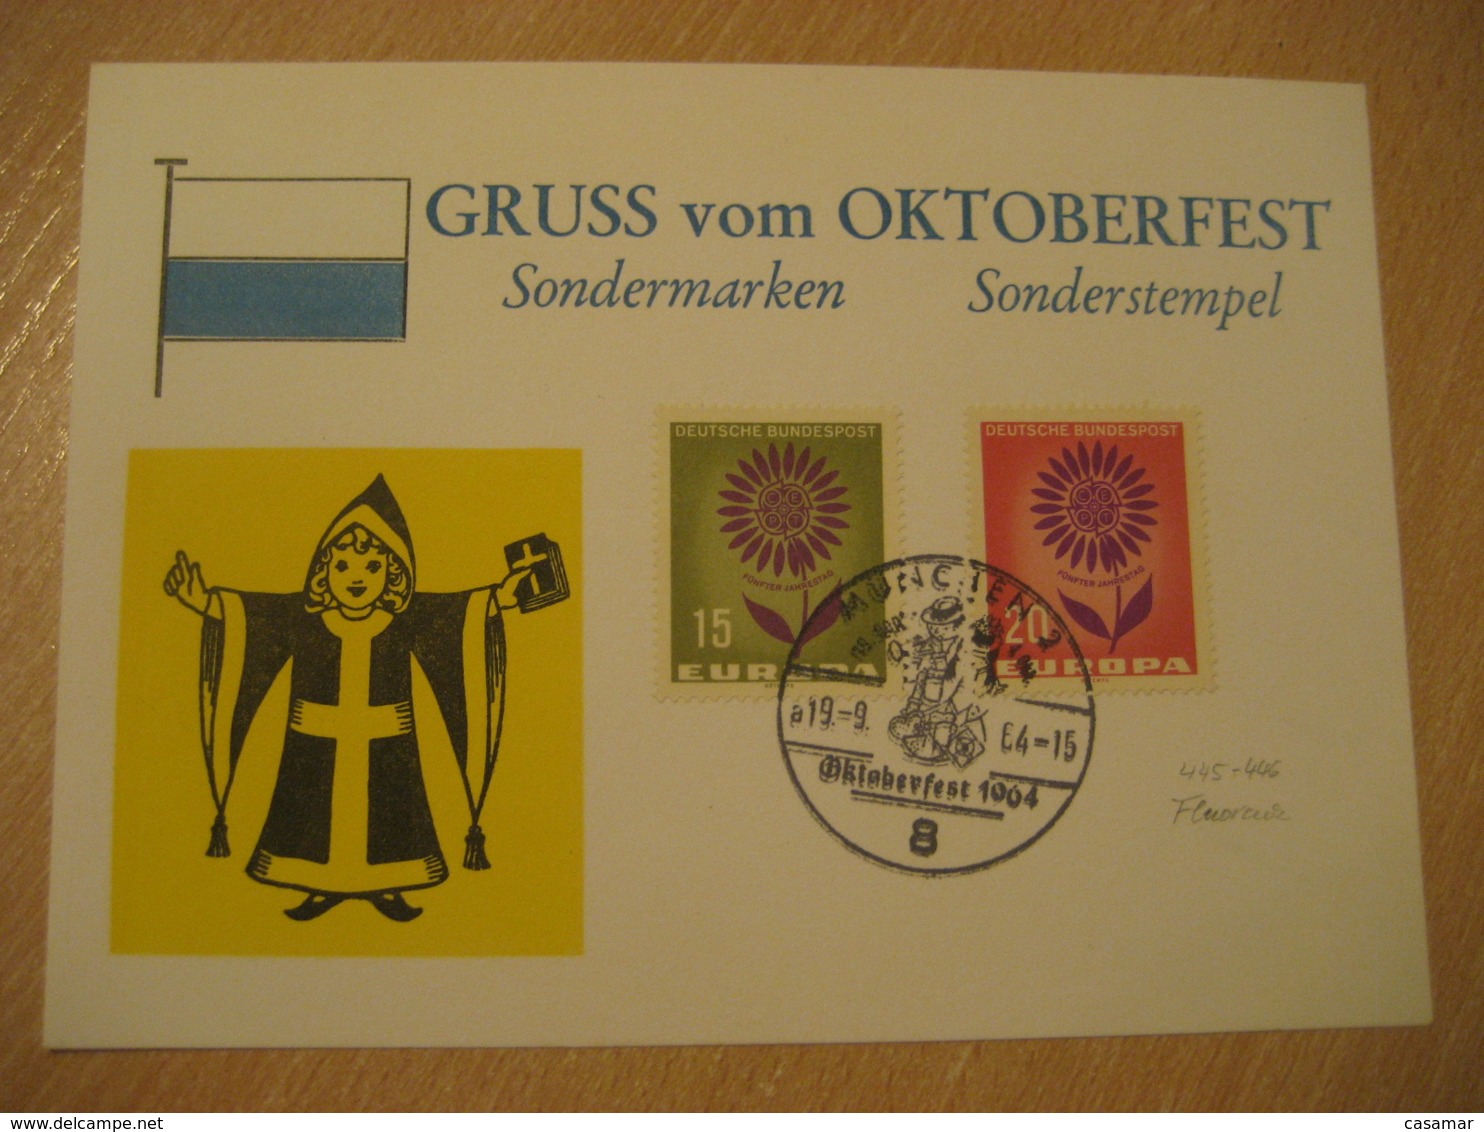 MUNCHEN 1964 OKTOBERFEST Cancel Cover GERMANY Bier Beer Pint Biere Cerveza Brewery - Bières